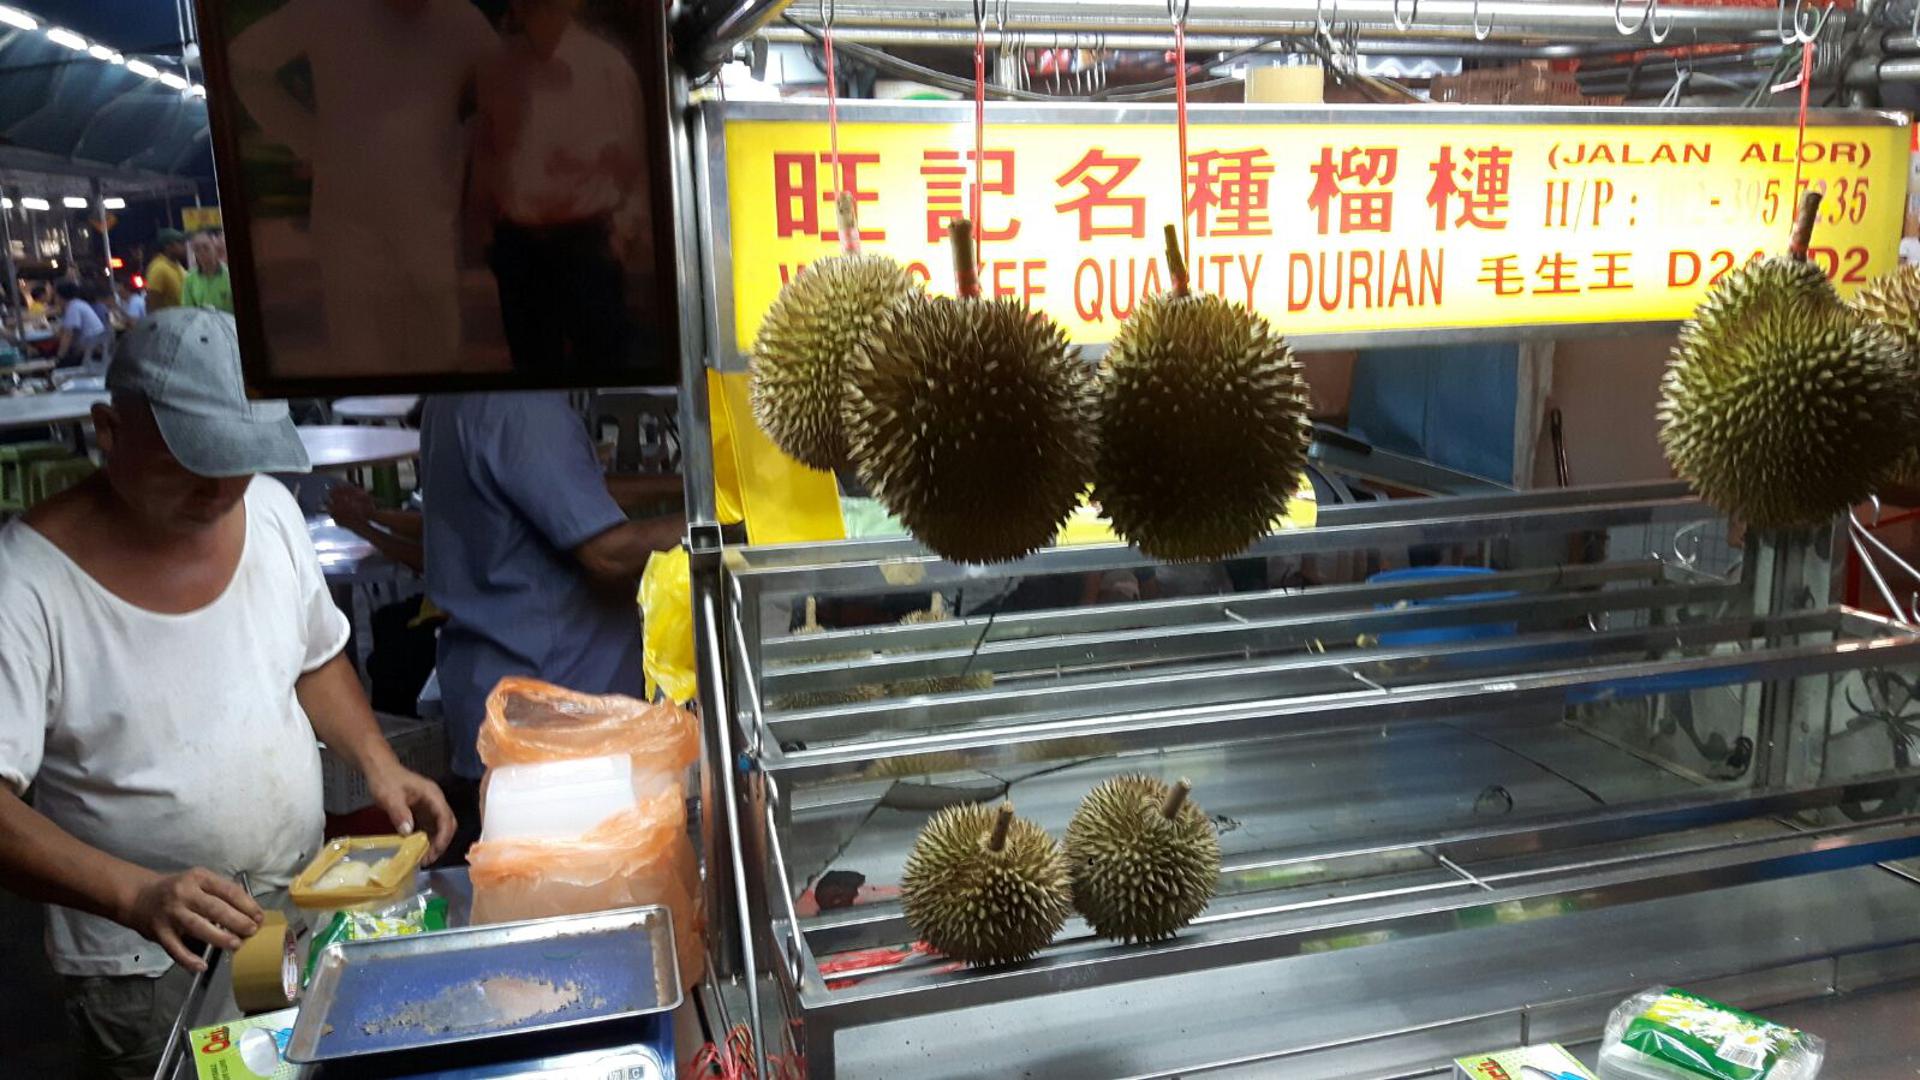 Durian na tržnici, odnosno ulici hrane (Jalan Alor) u Kuala Lumpuru. 